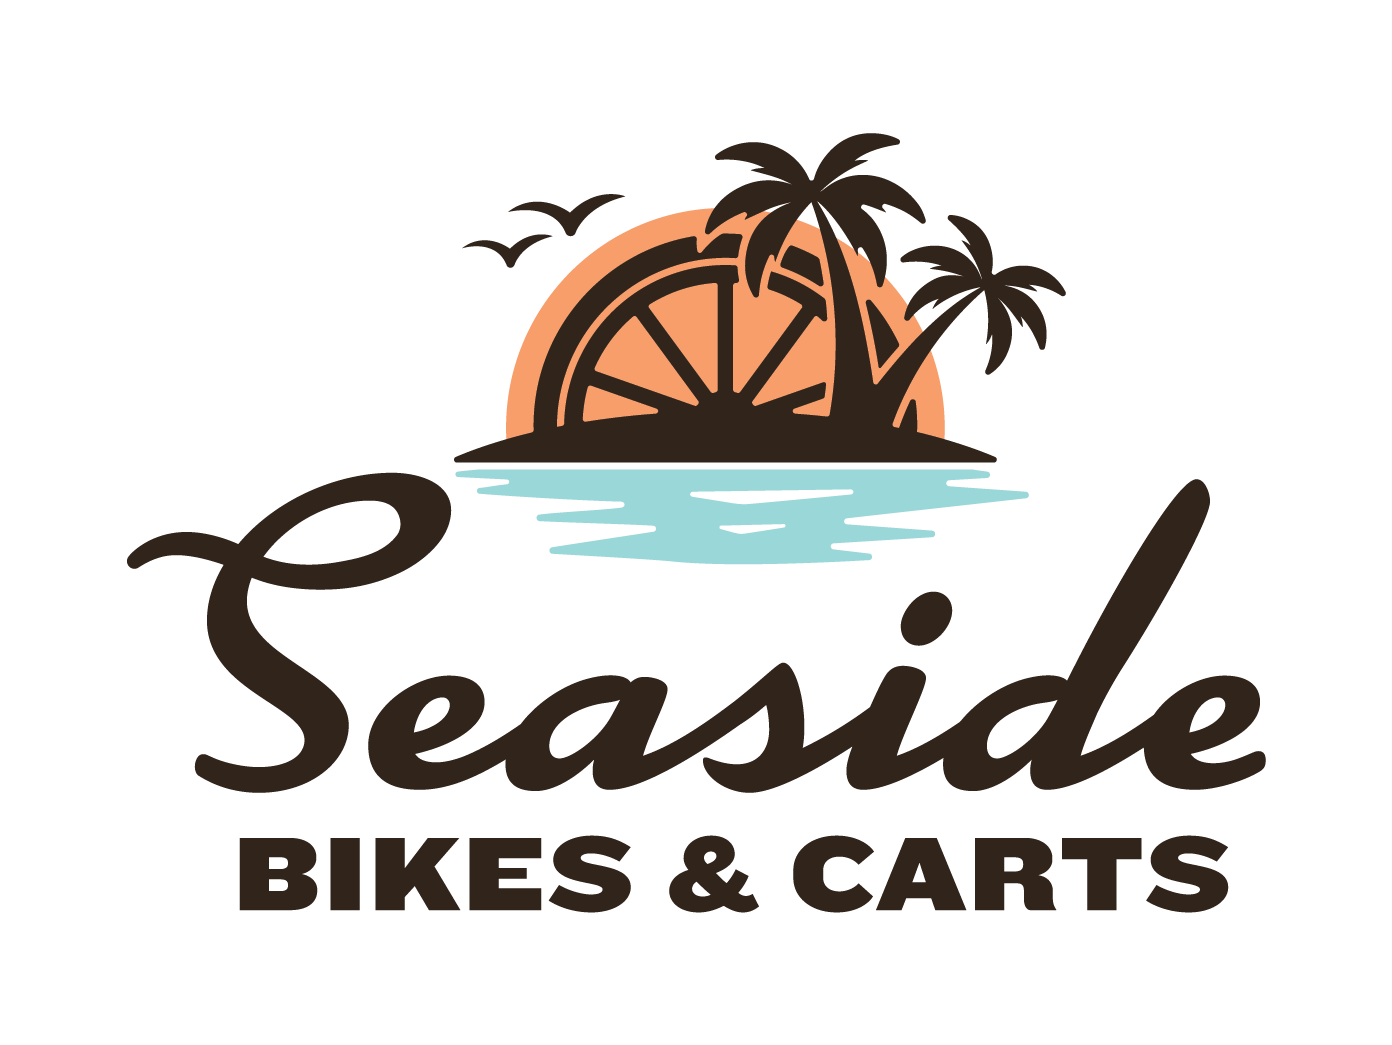 Bike & Golf Cart Rentals - Seaside Bikes & Carts - St. Simons Island